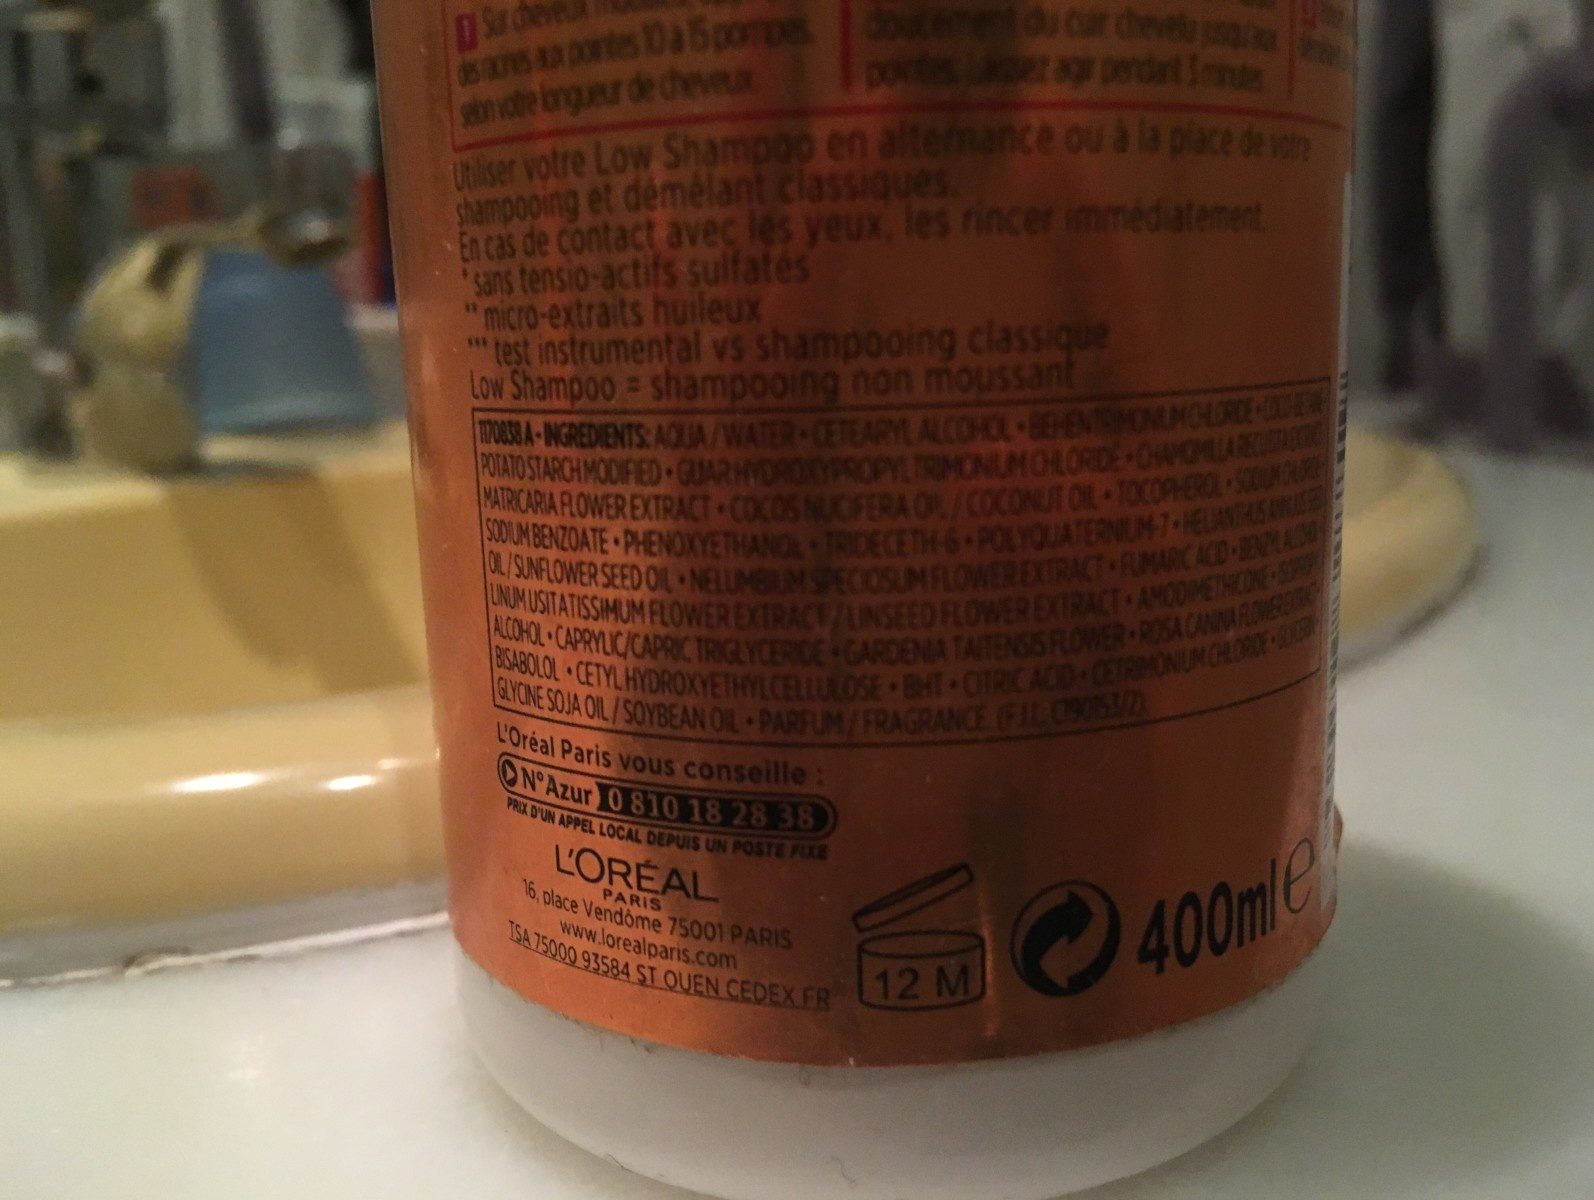 Low shampoo huile extraordinaire - Ingredients - fr